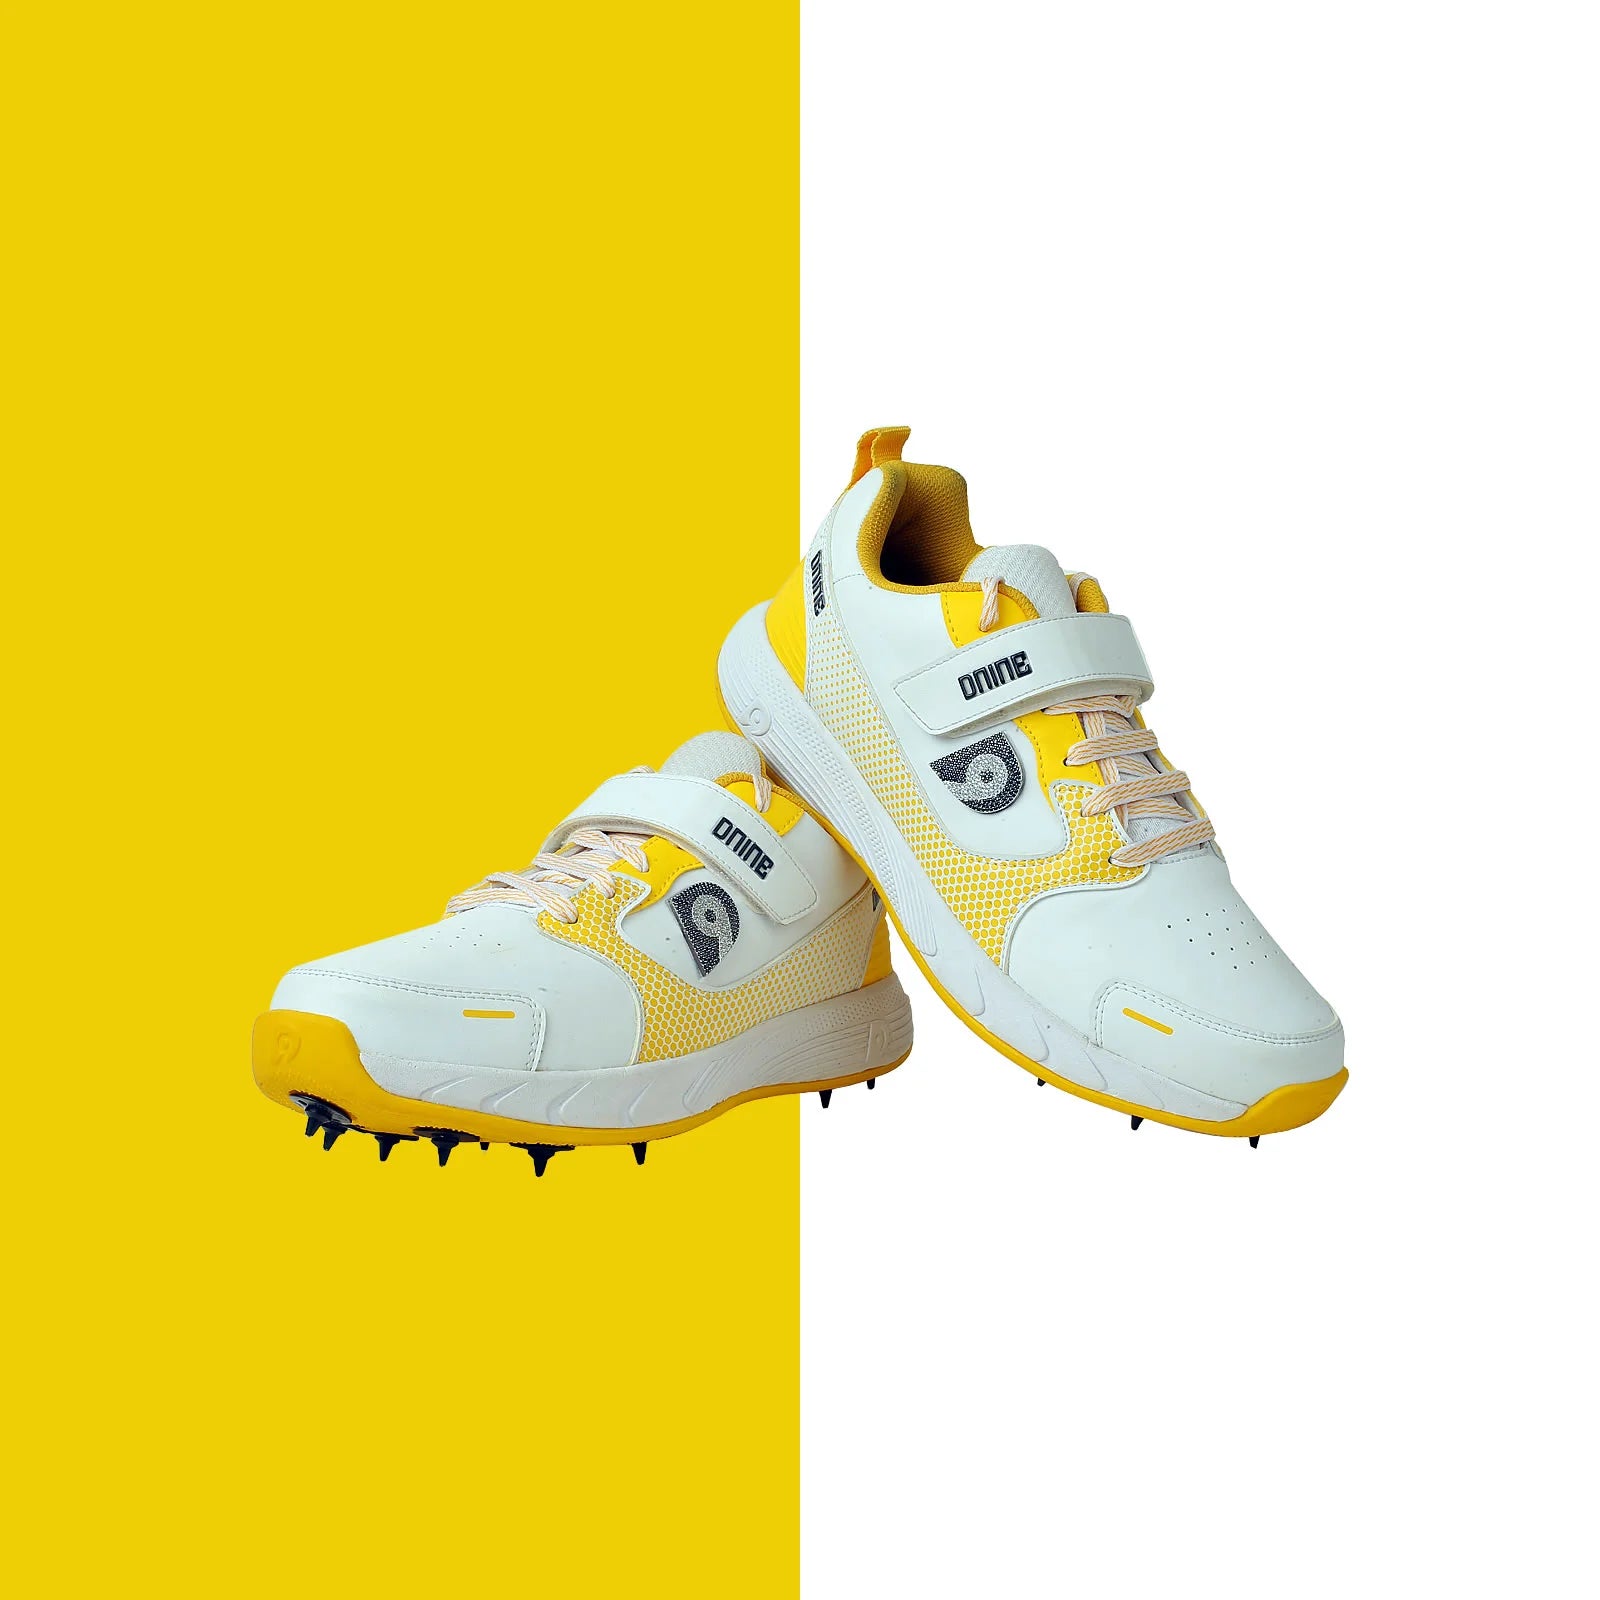 DNINE Polyurethane (PU) Prince-1 Yellow/Black/White Cricket Metal Spike Shoes